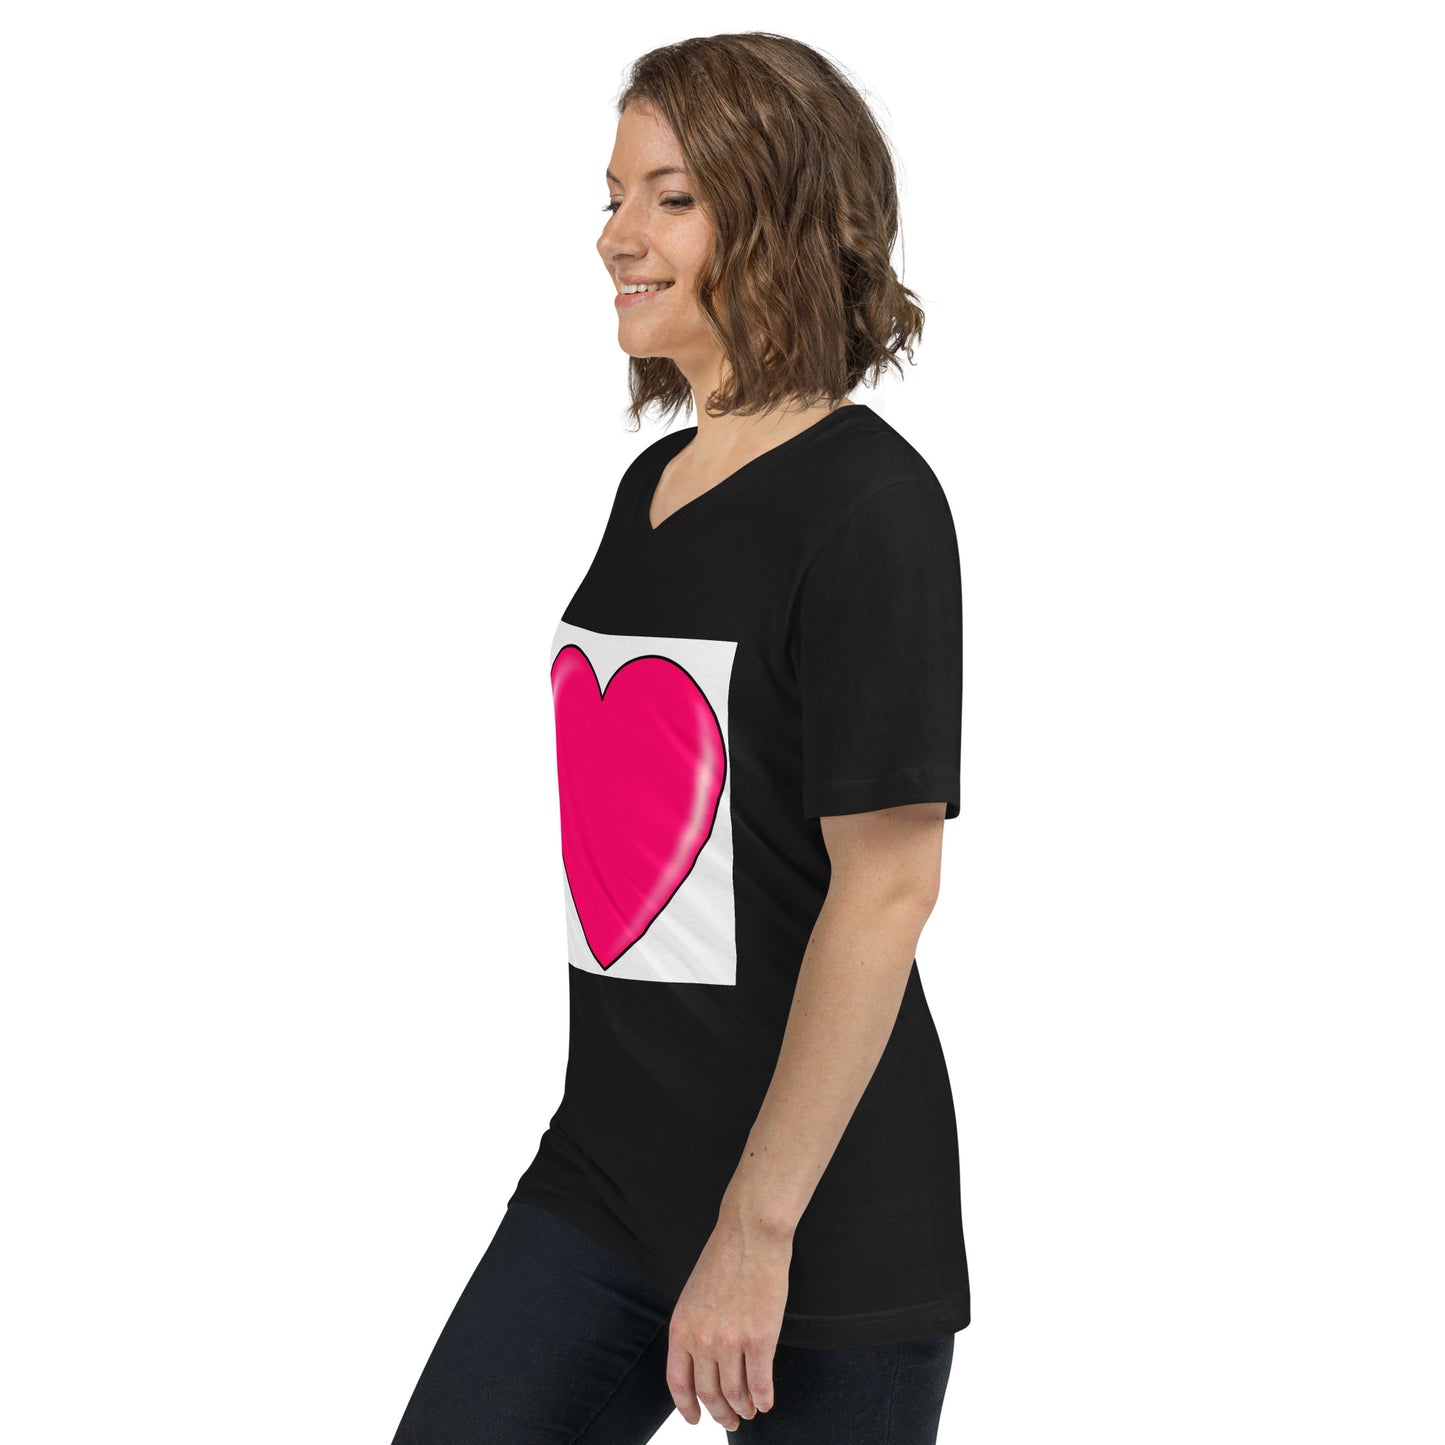 Photo Heart Unisex Short Sleeve V-Neck T-Shirt